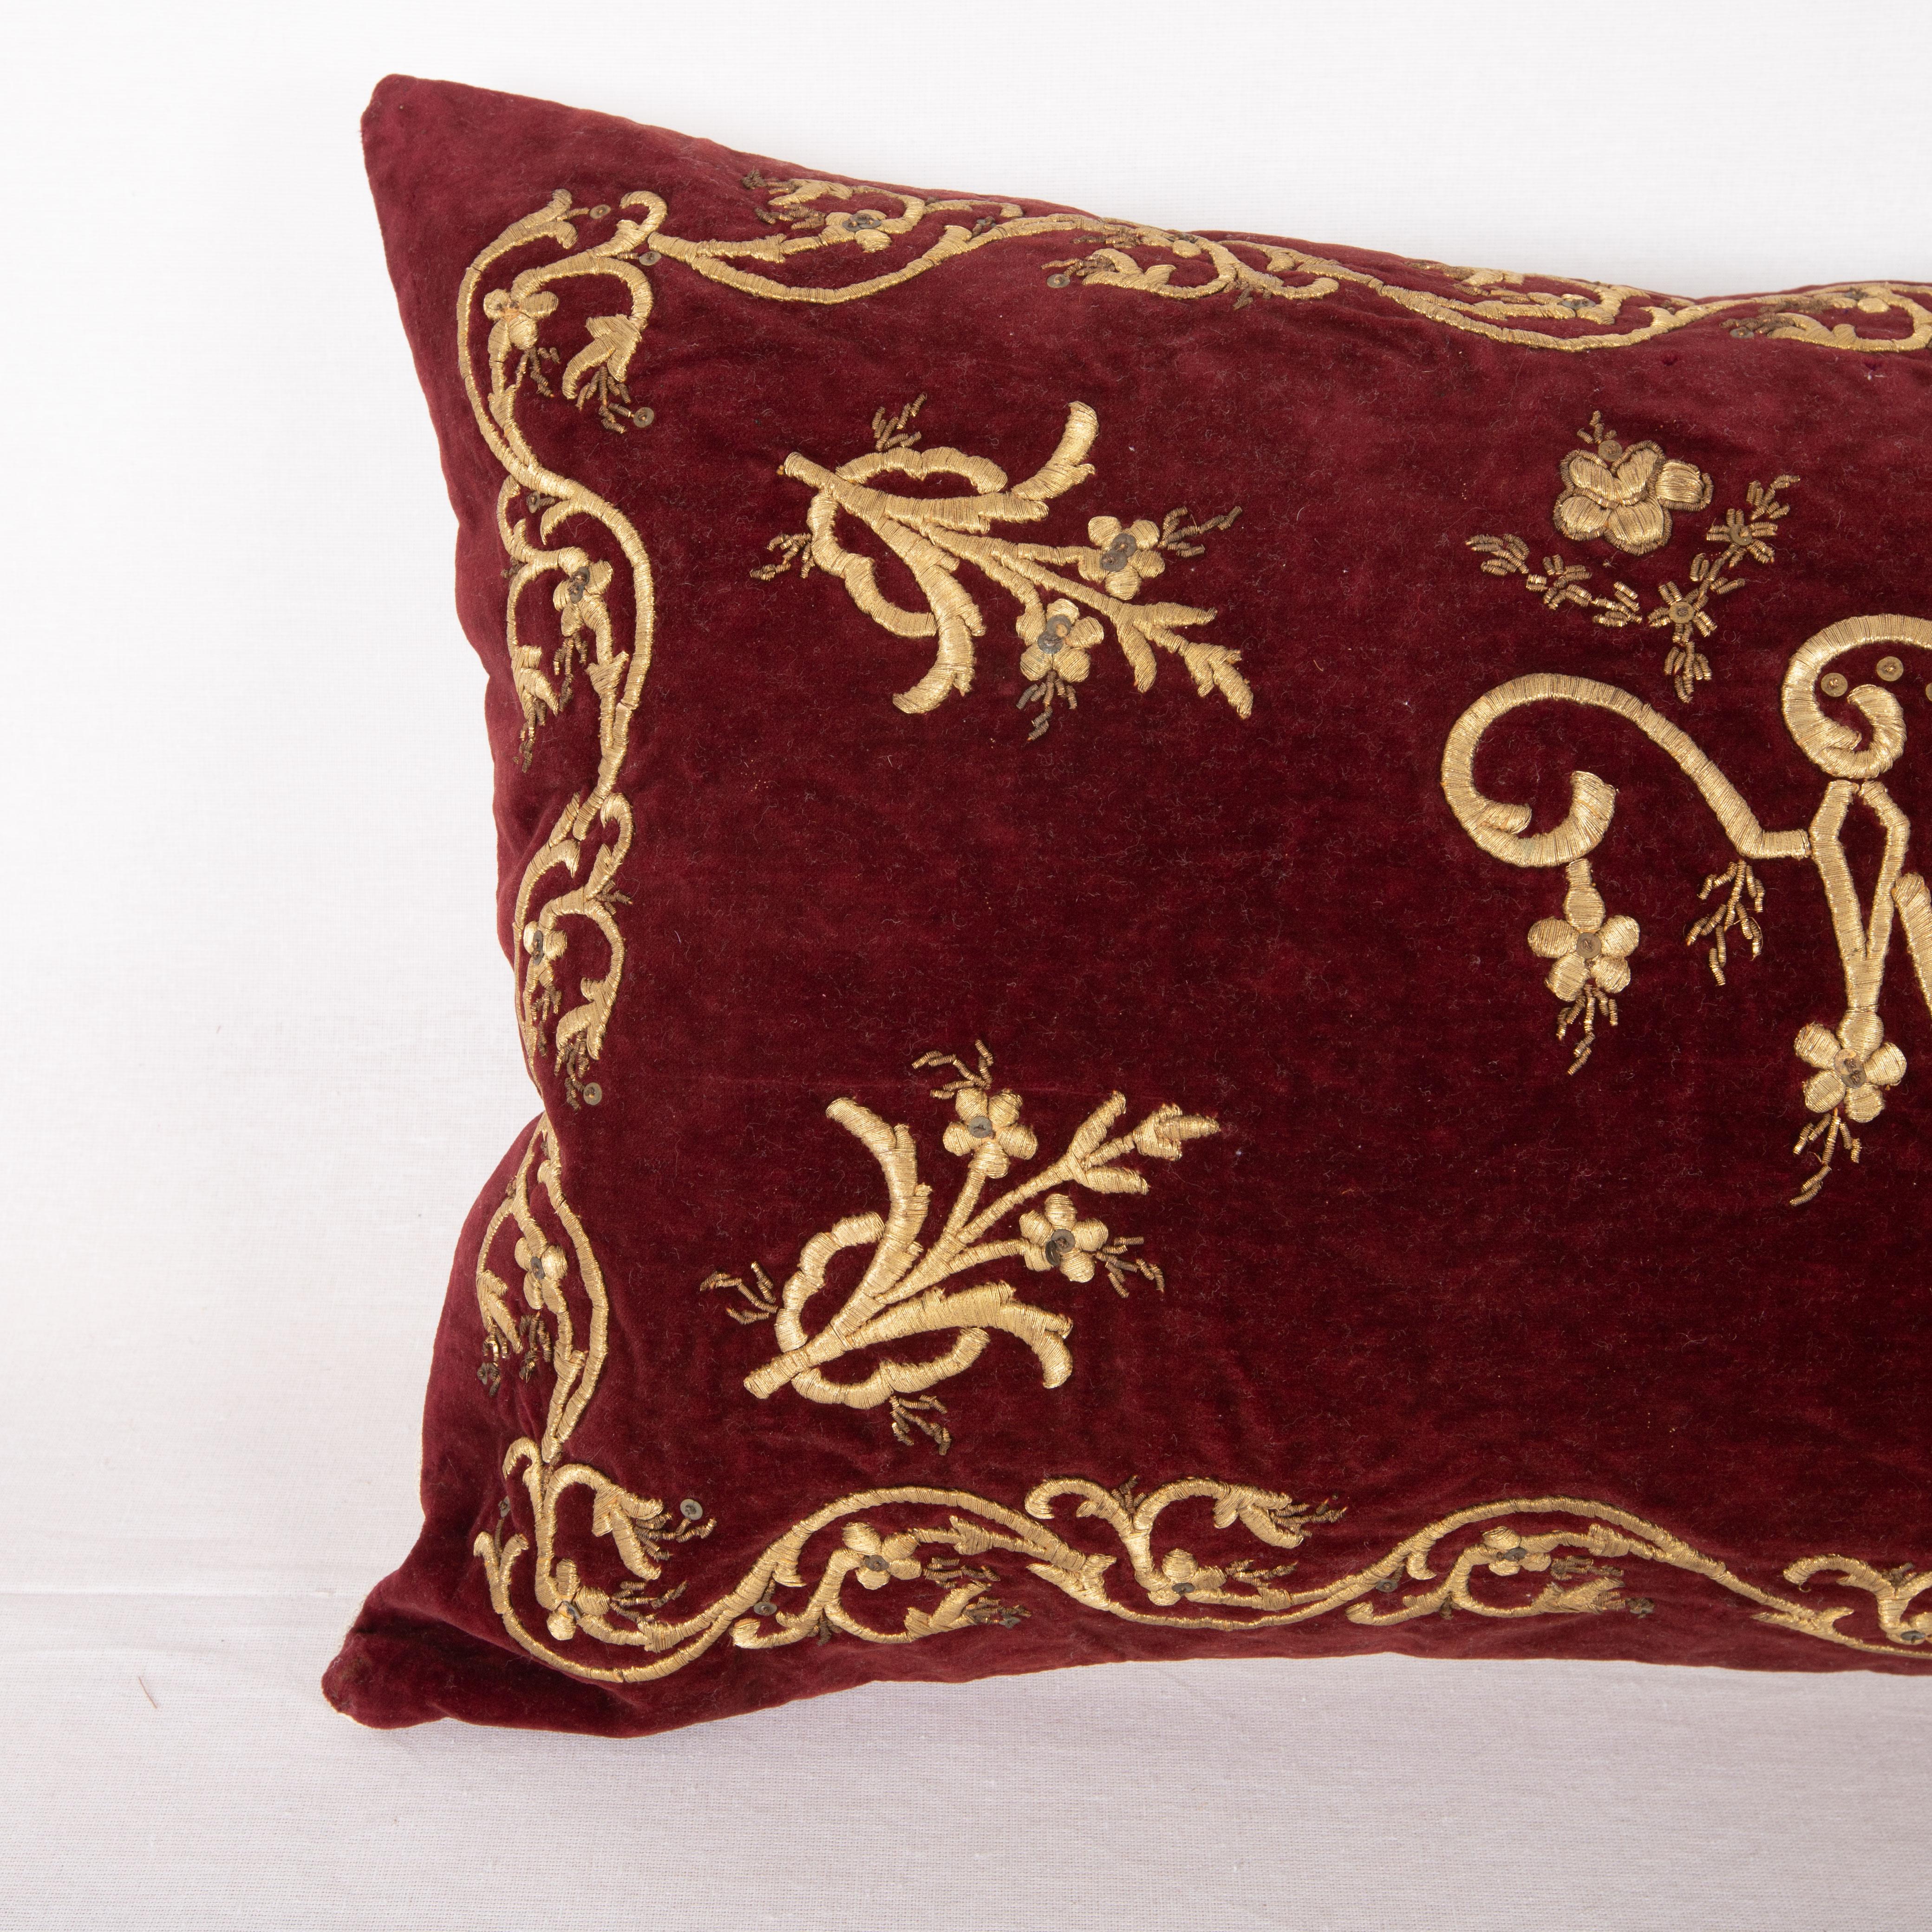 Embroidered Antique Silk Velvet Ottoman Sarma Pillow Cover, L 19th C.